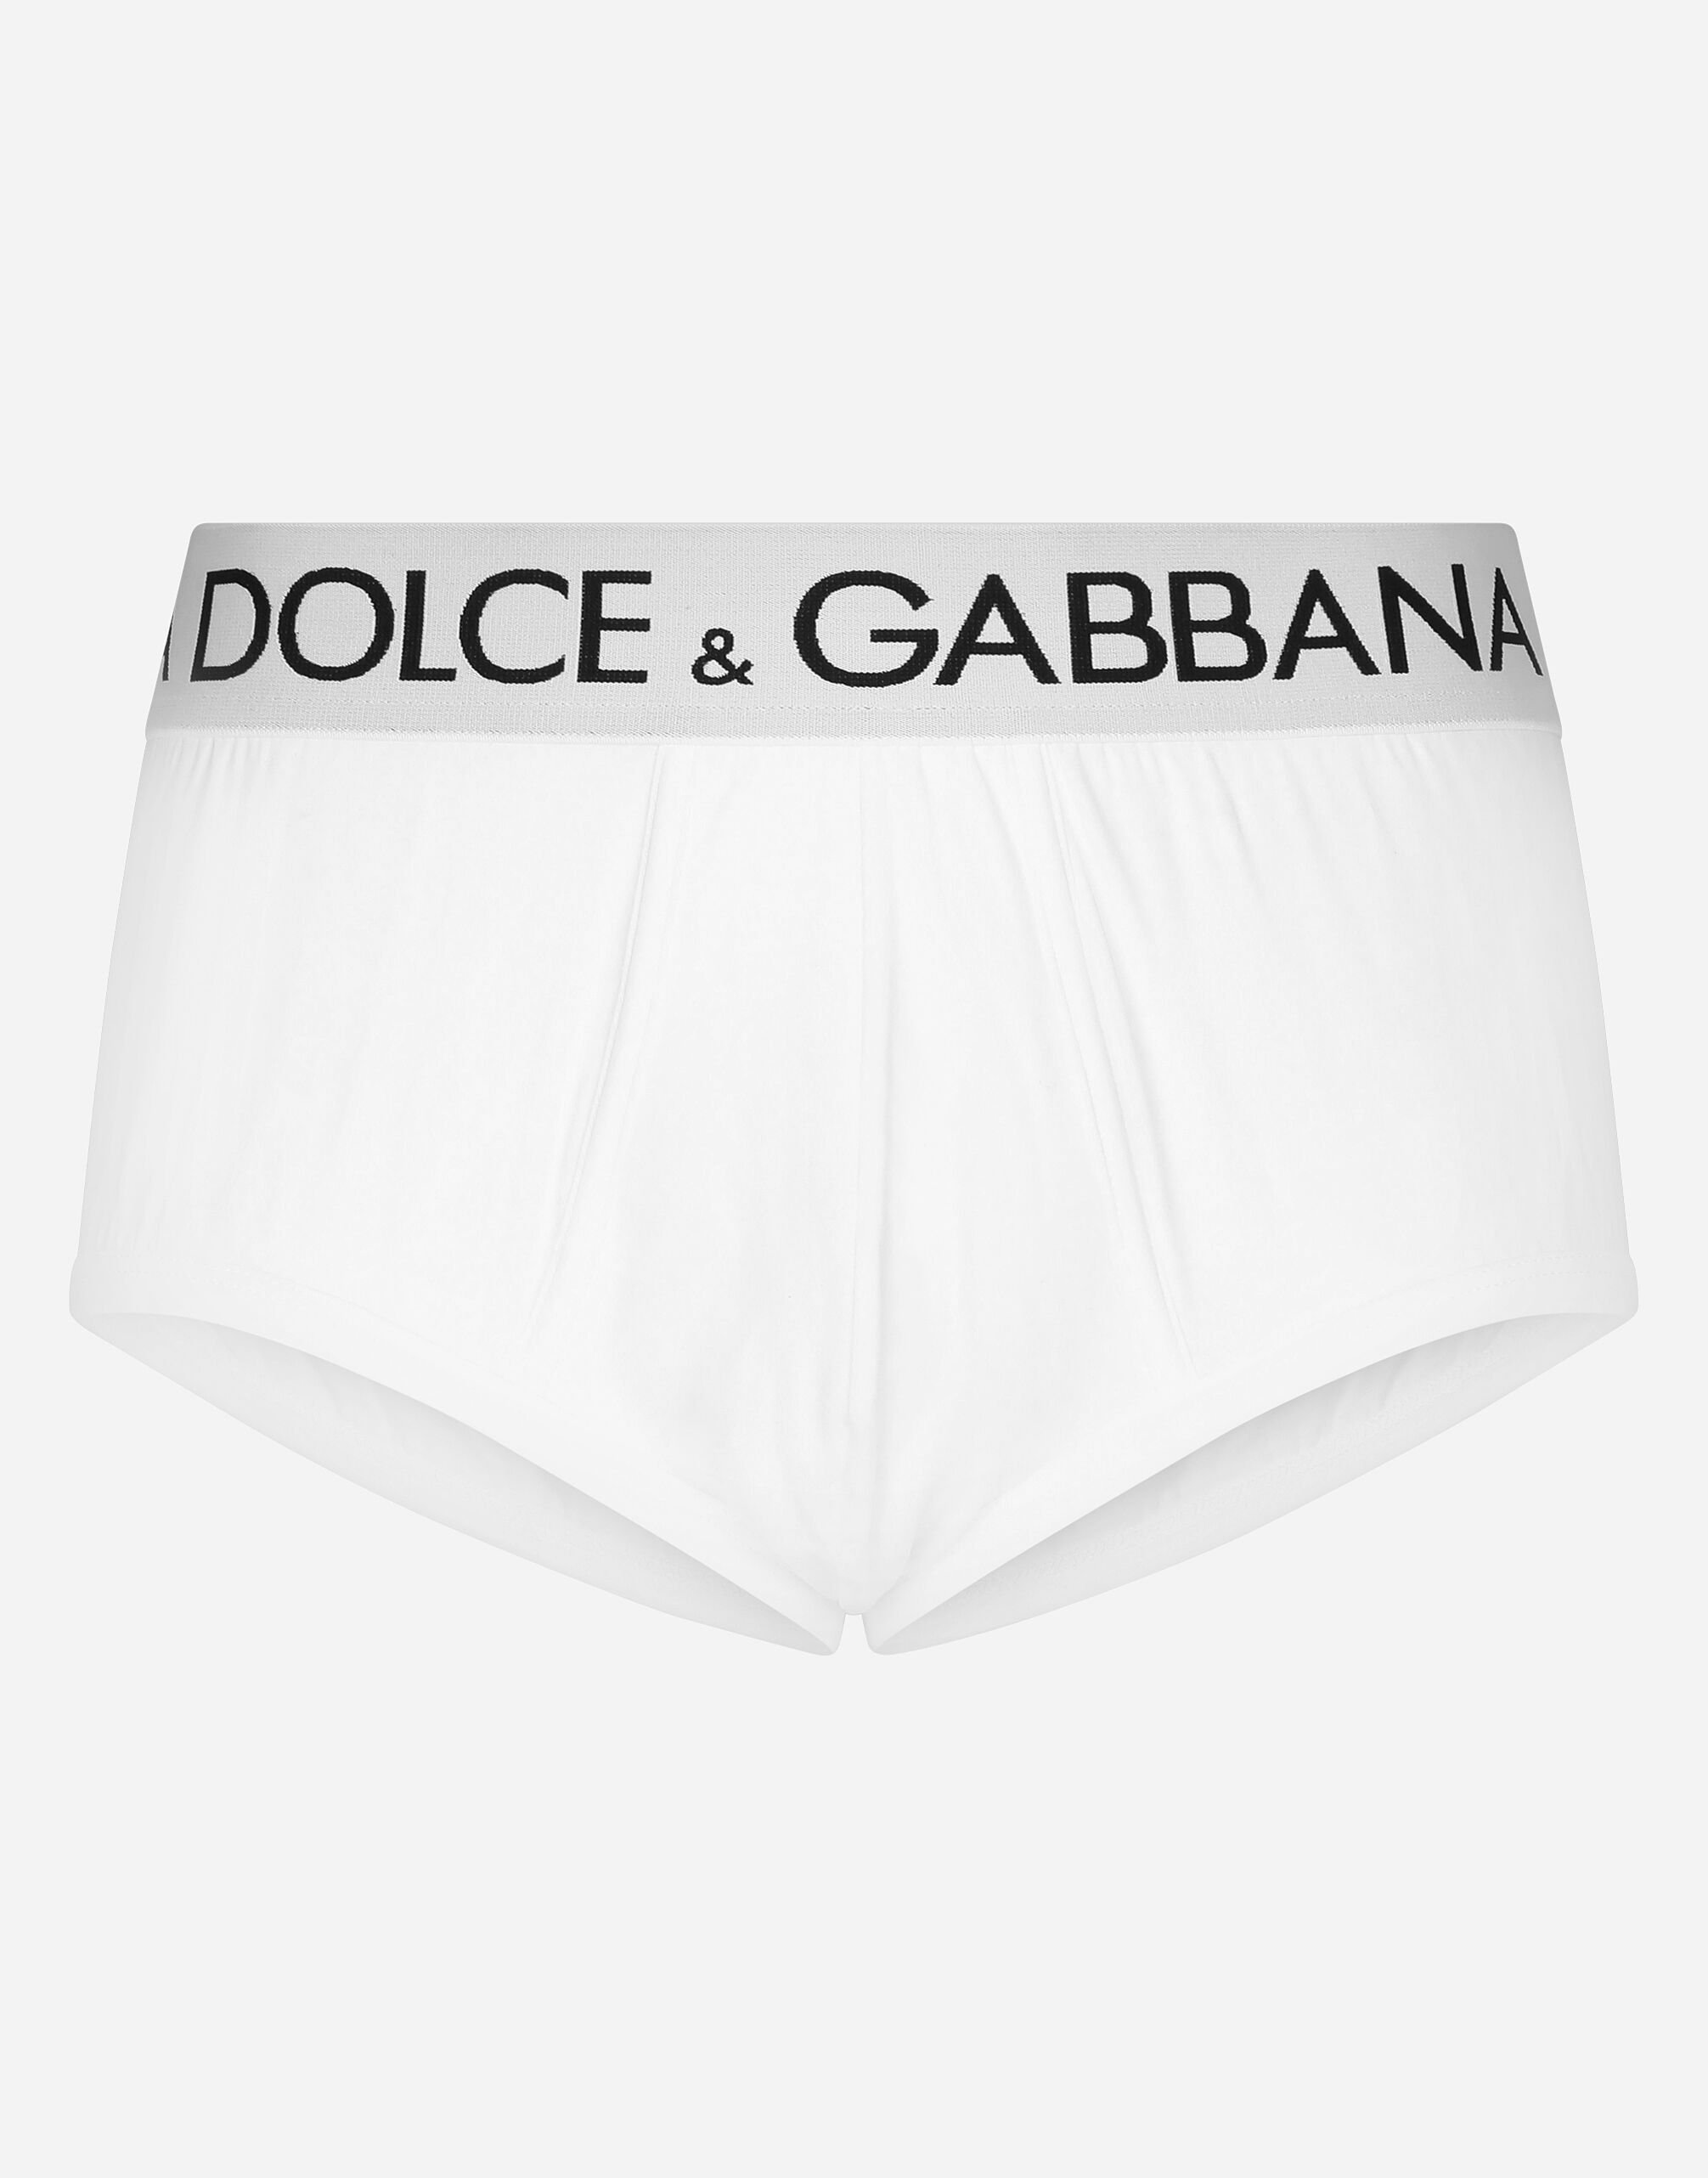 Dolce & Gabbana High-rise two-way stretch jersey Brando briefs White M4E67JOUAIG